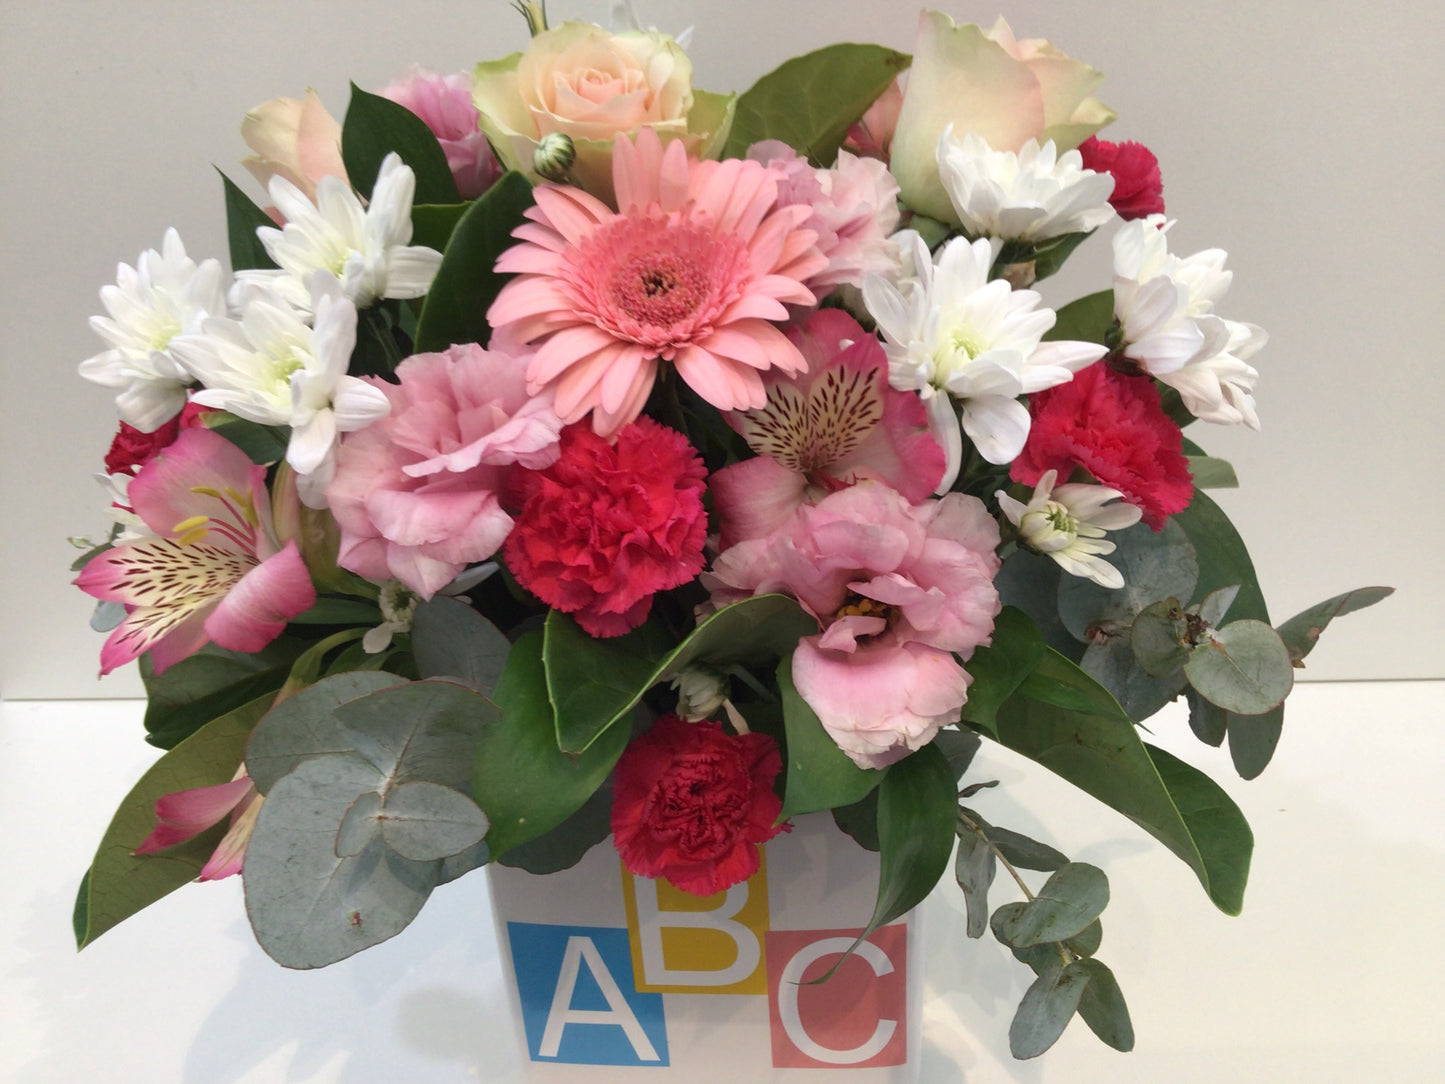 ABC Blossoms